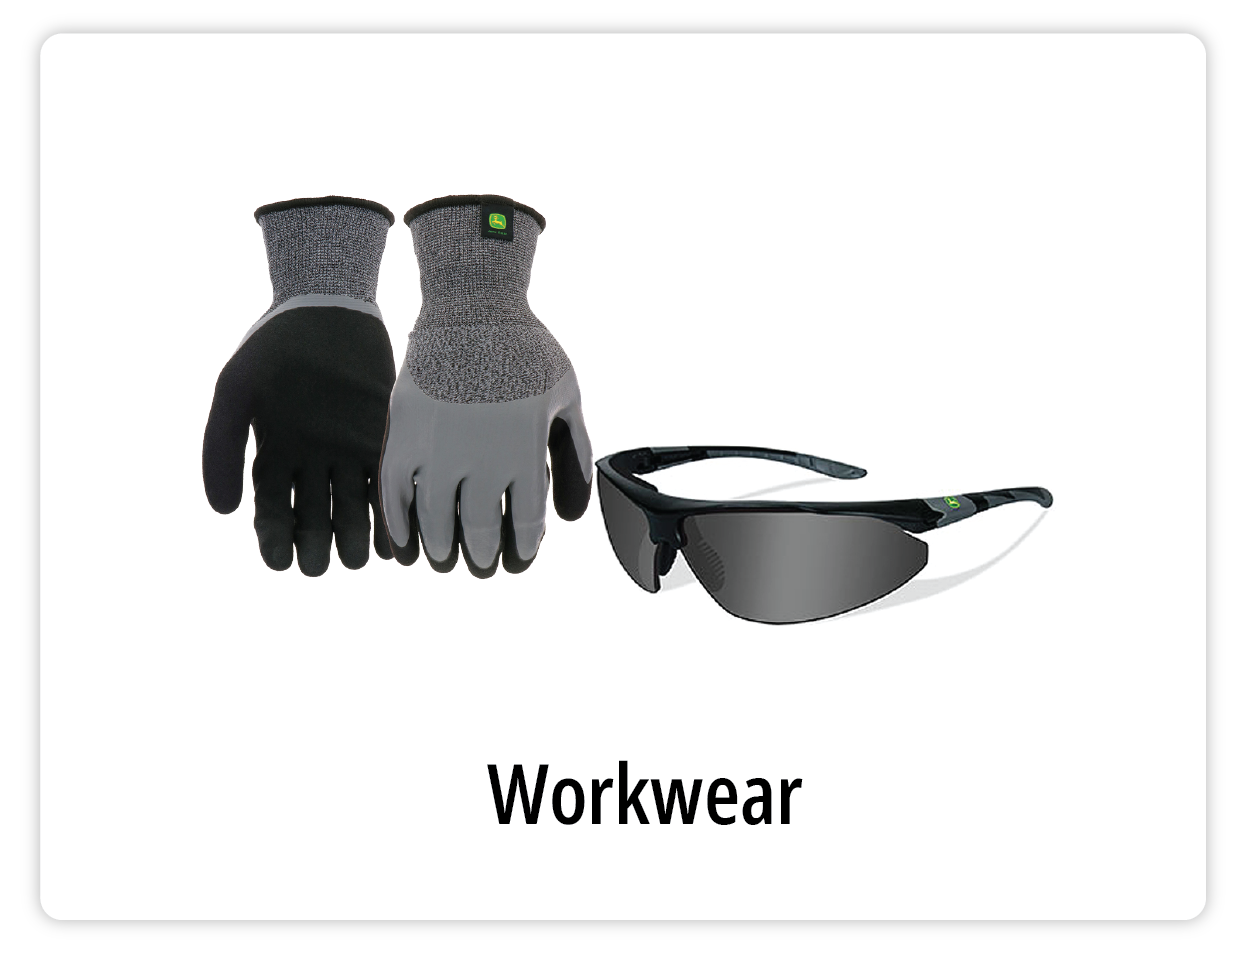 John Deere Work Gear, Safety, and work accessories